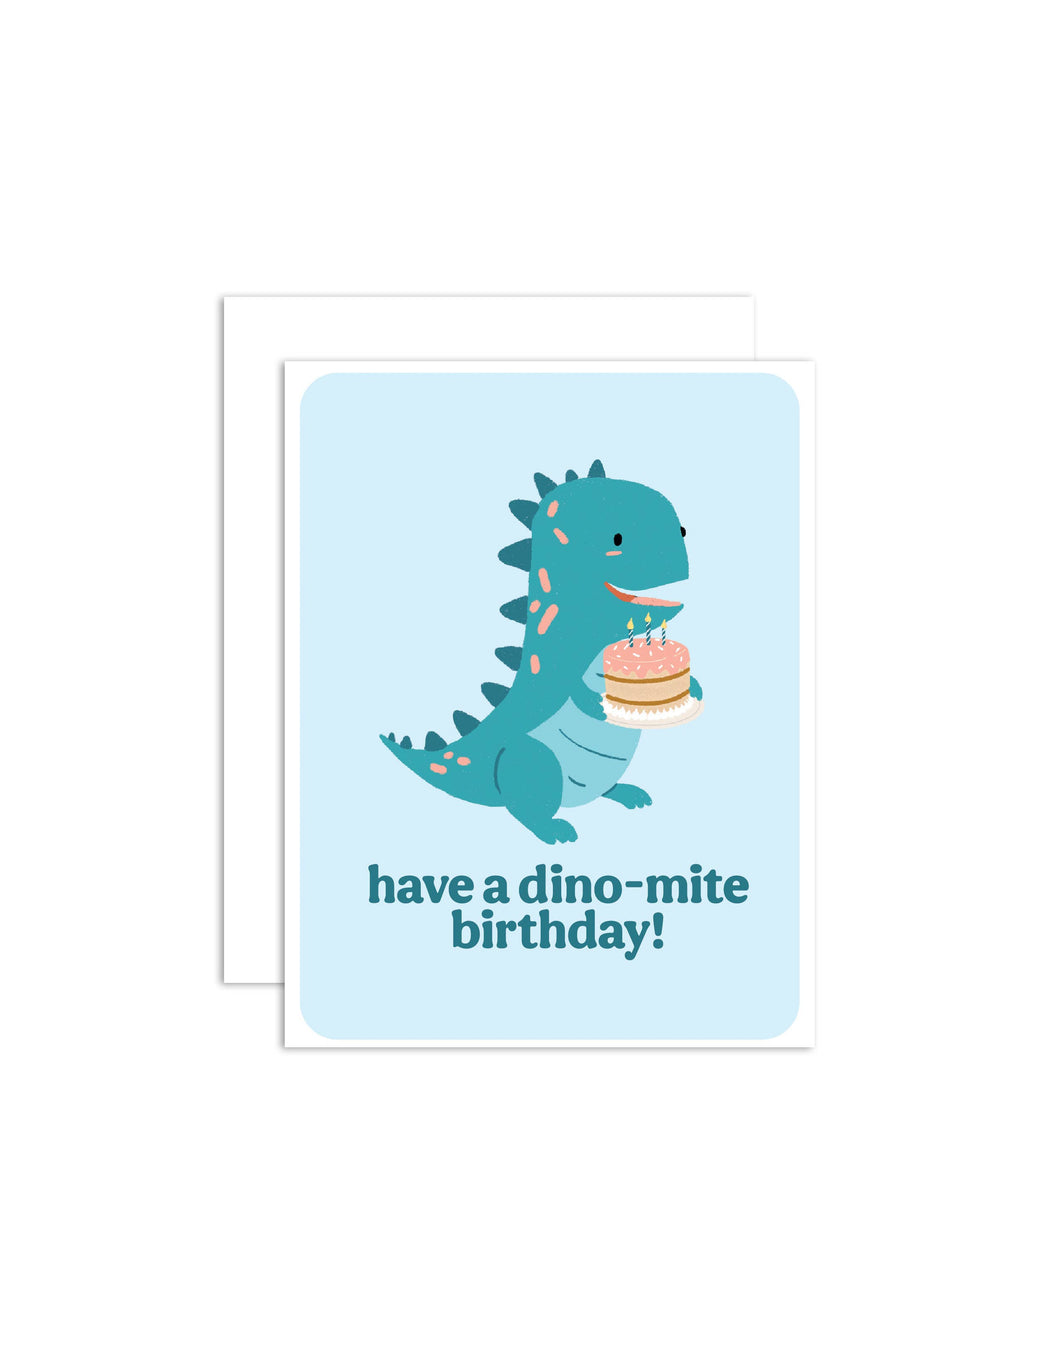 Dinomite Birthday Greeting Card